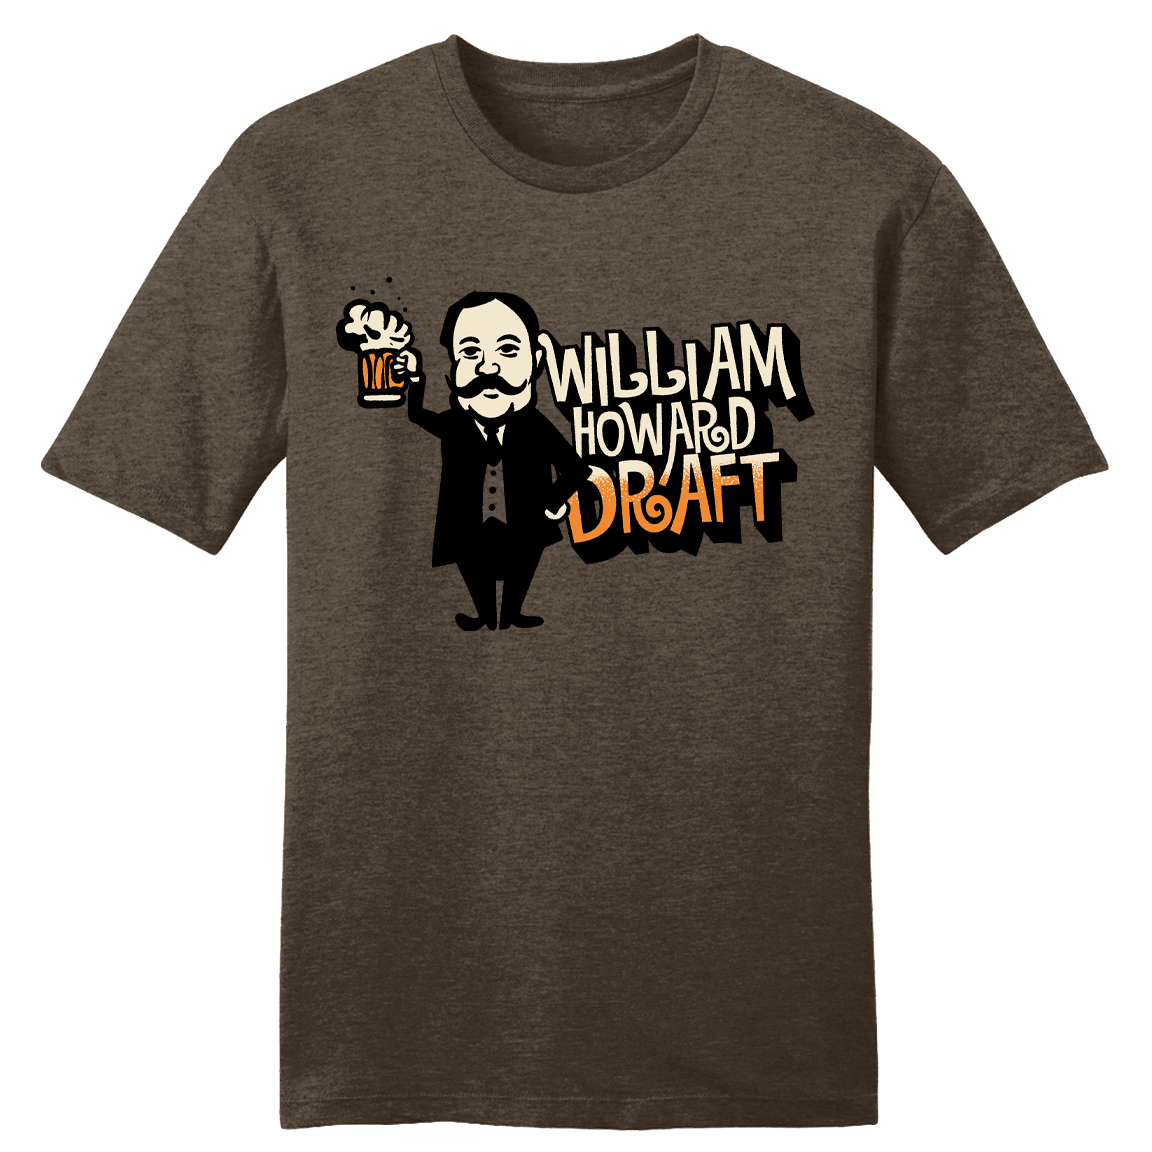 William Howard Draft - Cincy Shirts